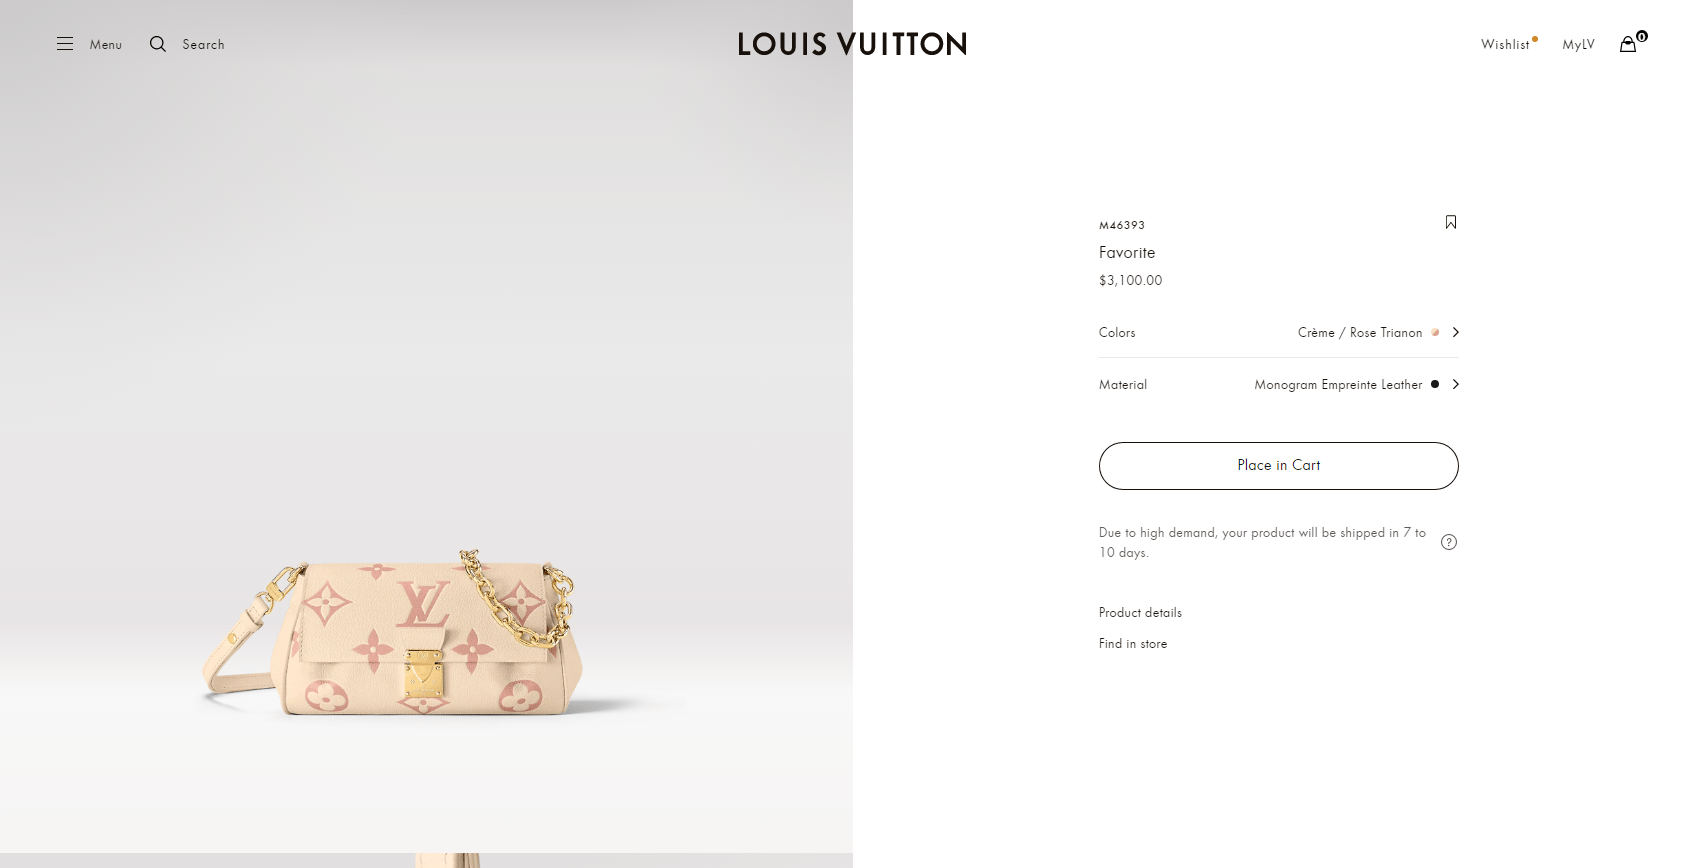 Favorite-Monogram-Empreinte-Leather-Women-Handbags-LOUIS-VUITTON-.png